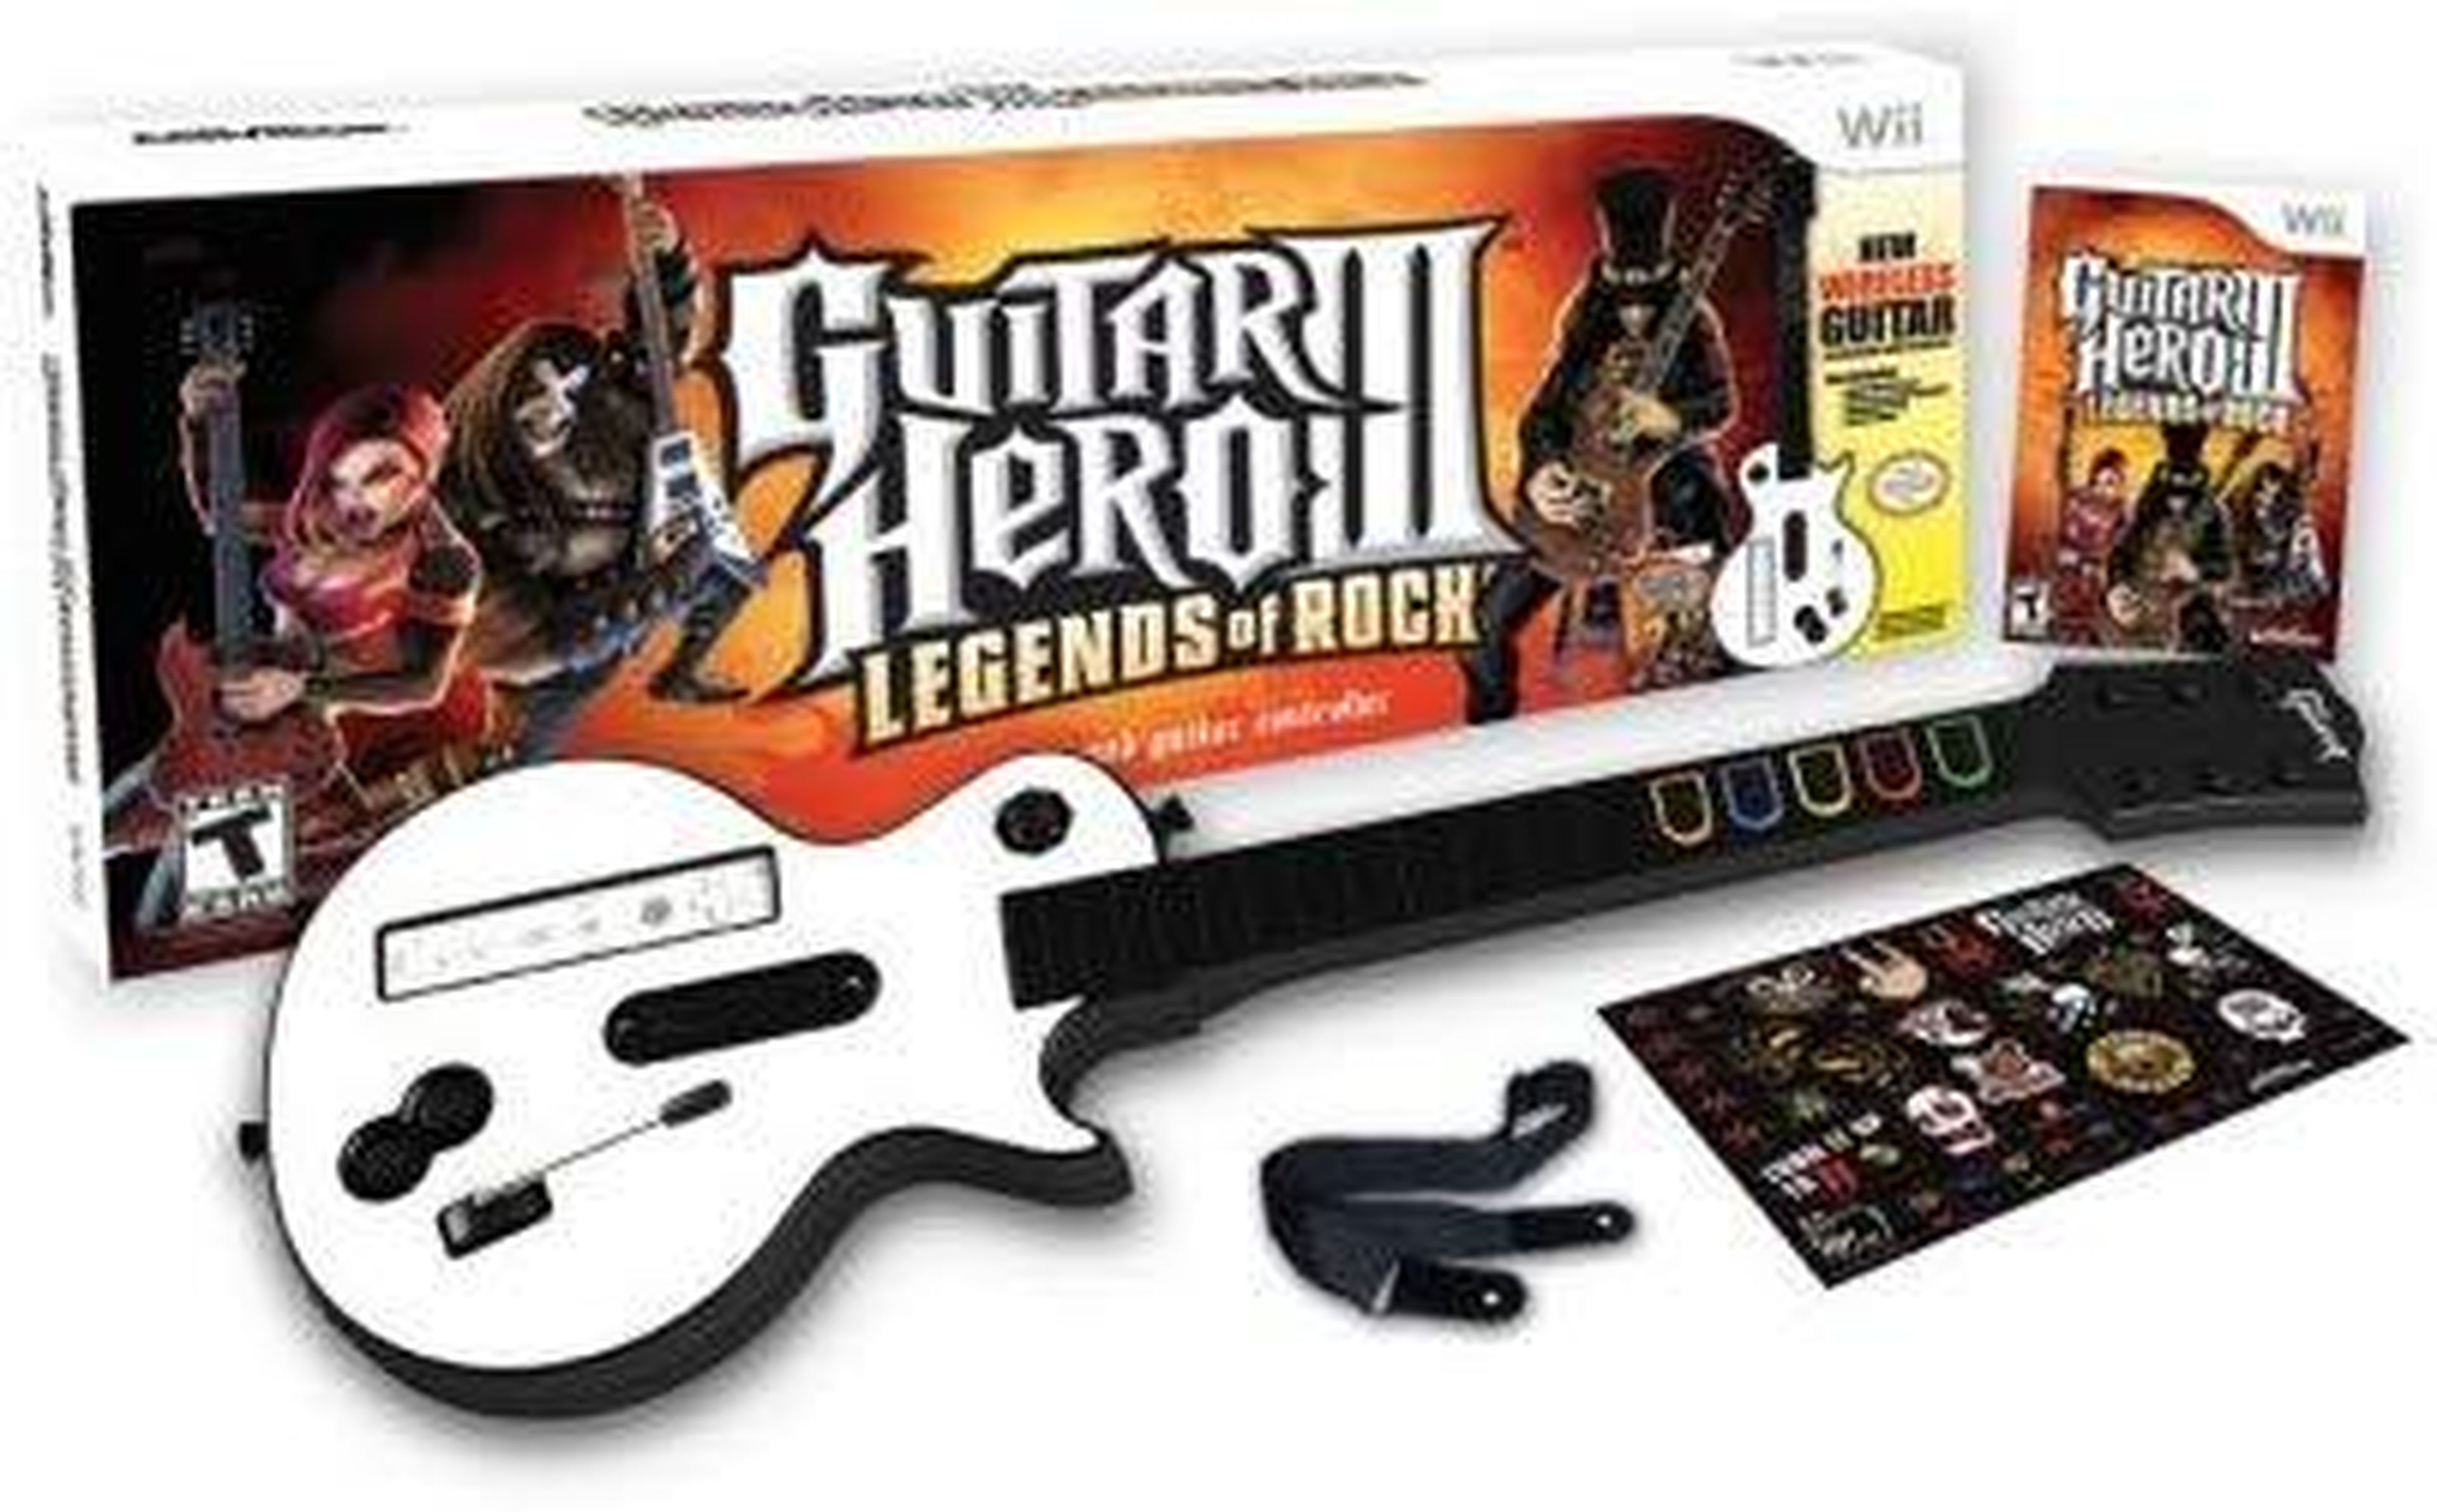 2007 — "Guitar Hero III: Legends of Rock" (PlayStation 2, PlayStation 3, Xbox, Xbox 360, Wii, Microsoft Windows, Mac OS X)